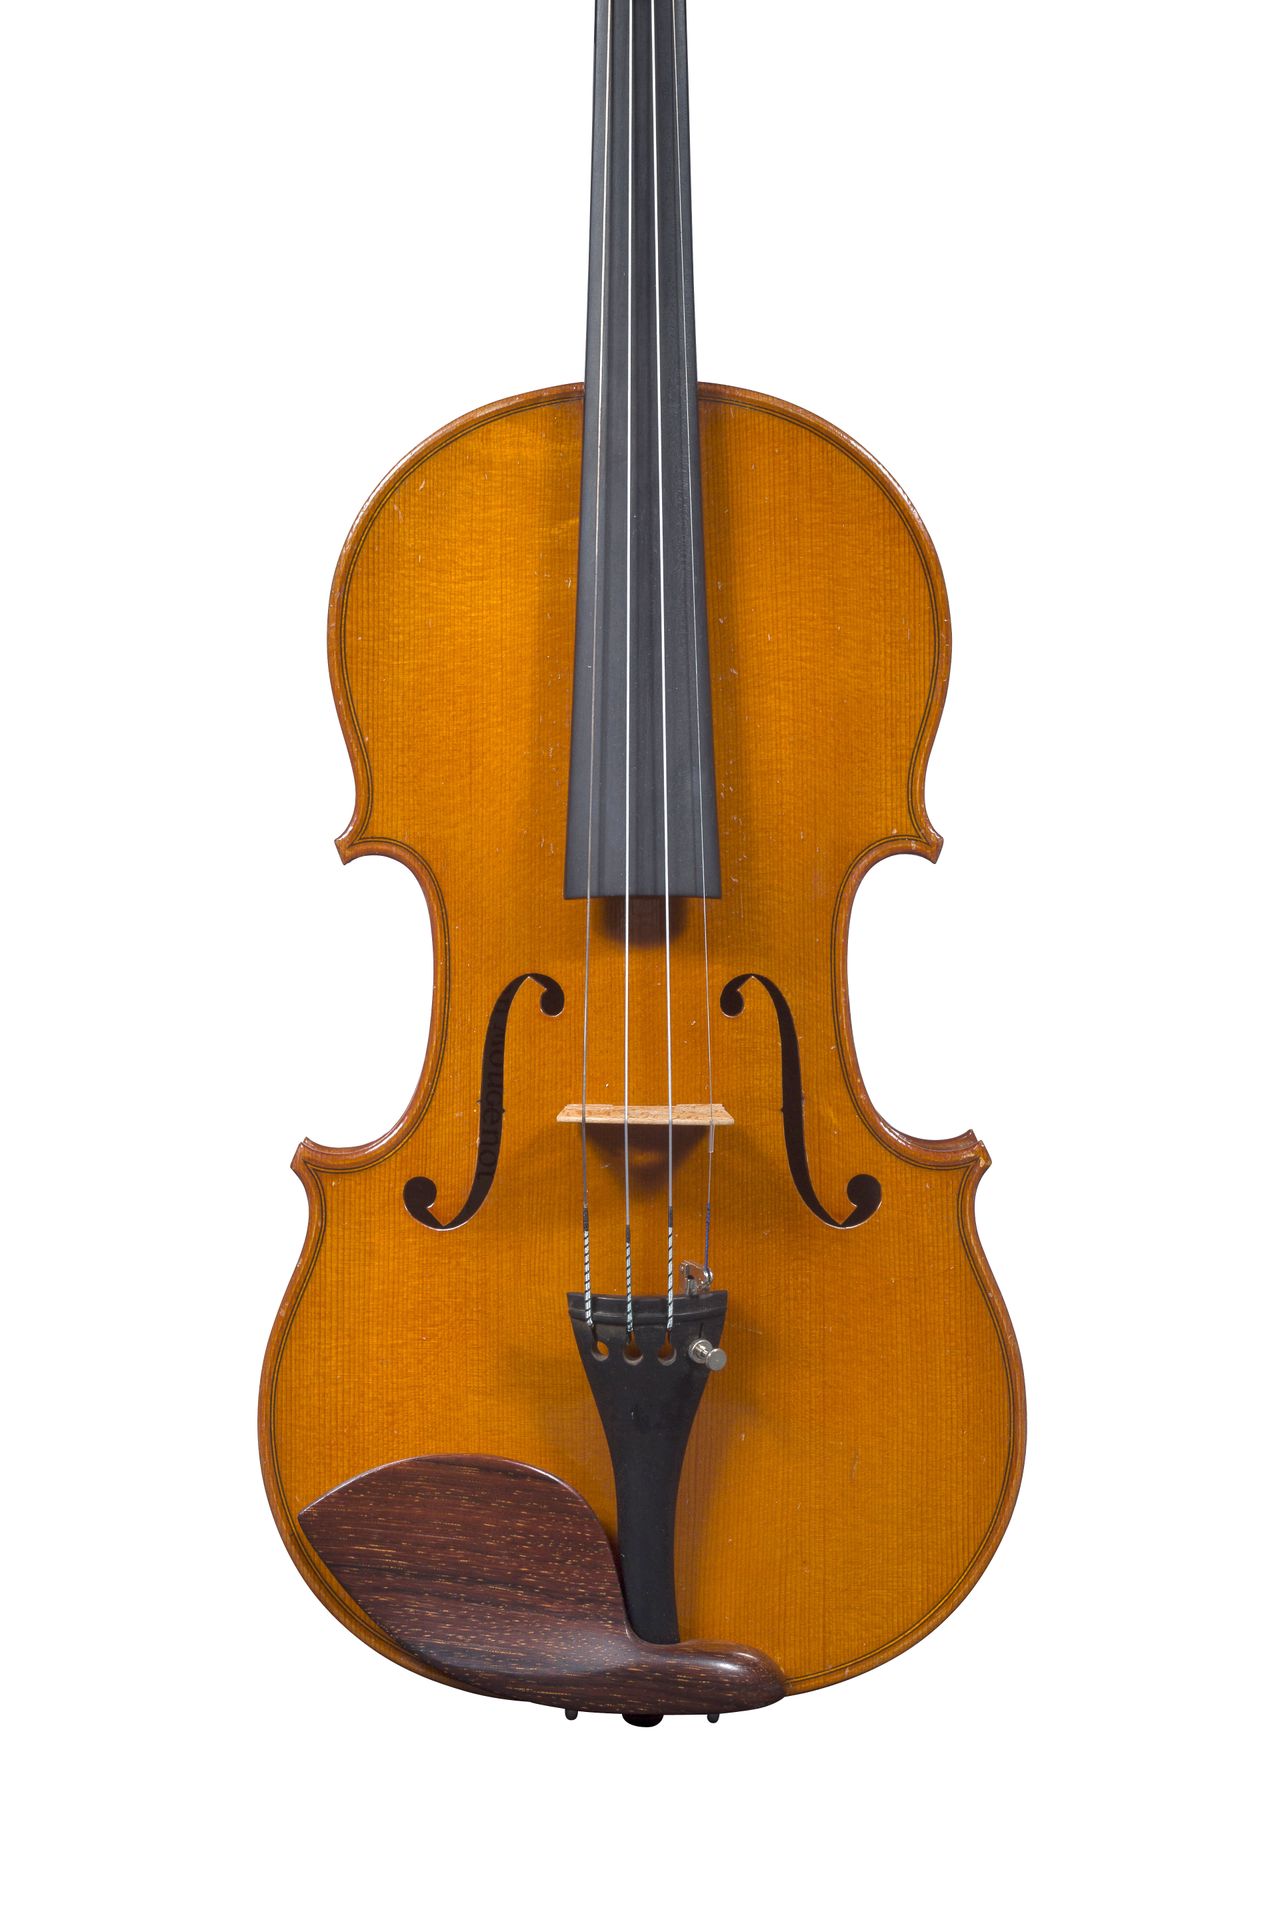 Violon de Léon Mougenot Jacquet Gand Made in Mirecourt in 1925, number 479
Beari&hellip;